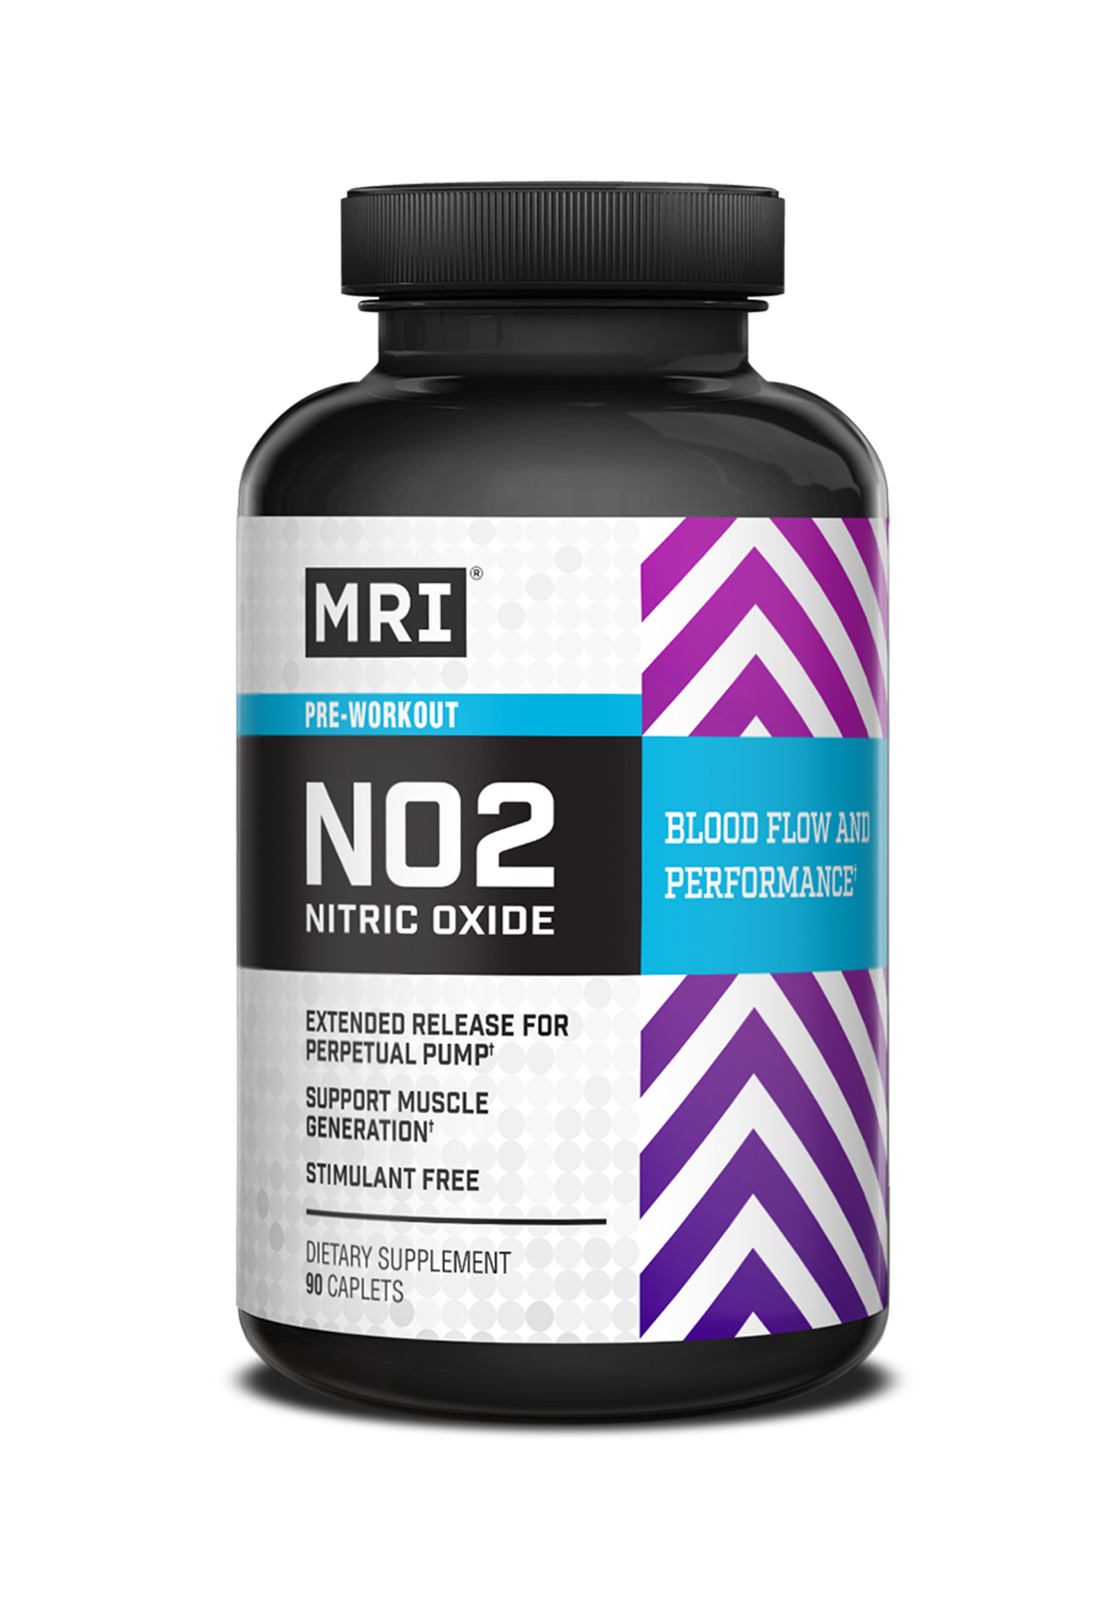 MRI NO2 Nitric Oxide Original Pre Workout Muscle Pump 90 capsules - SALE